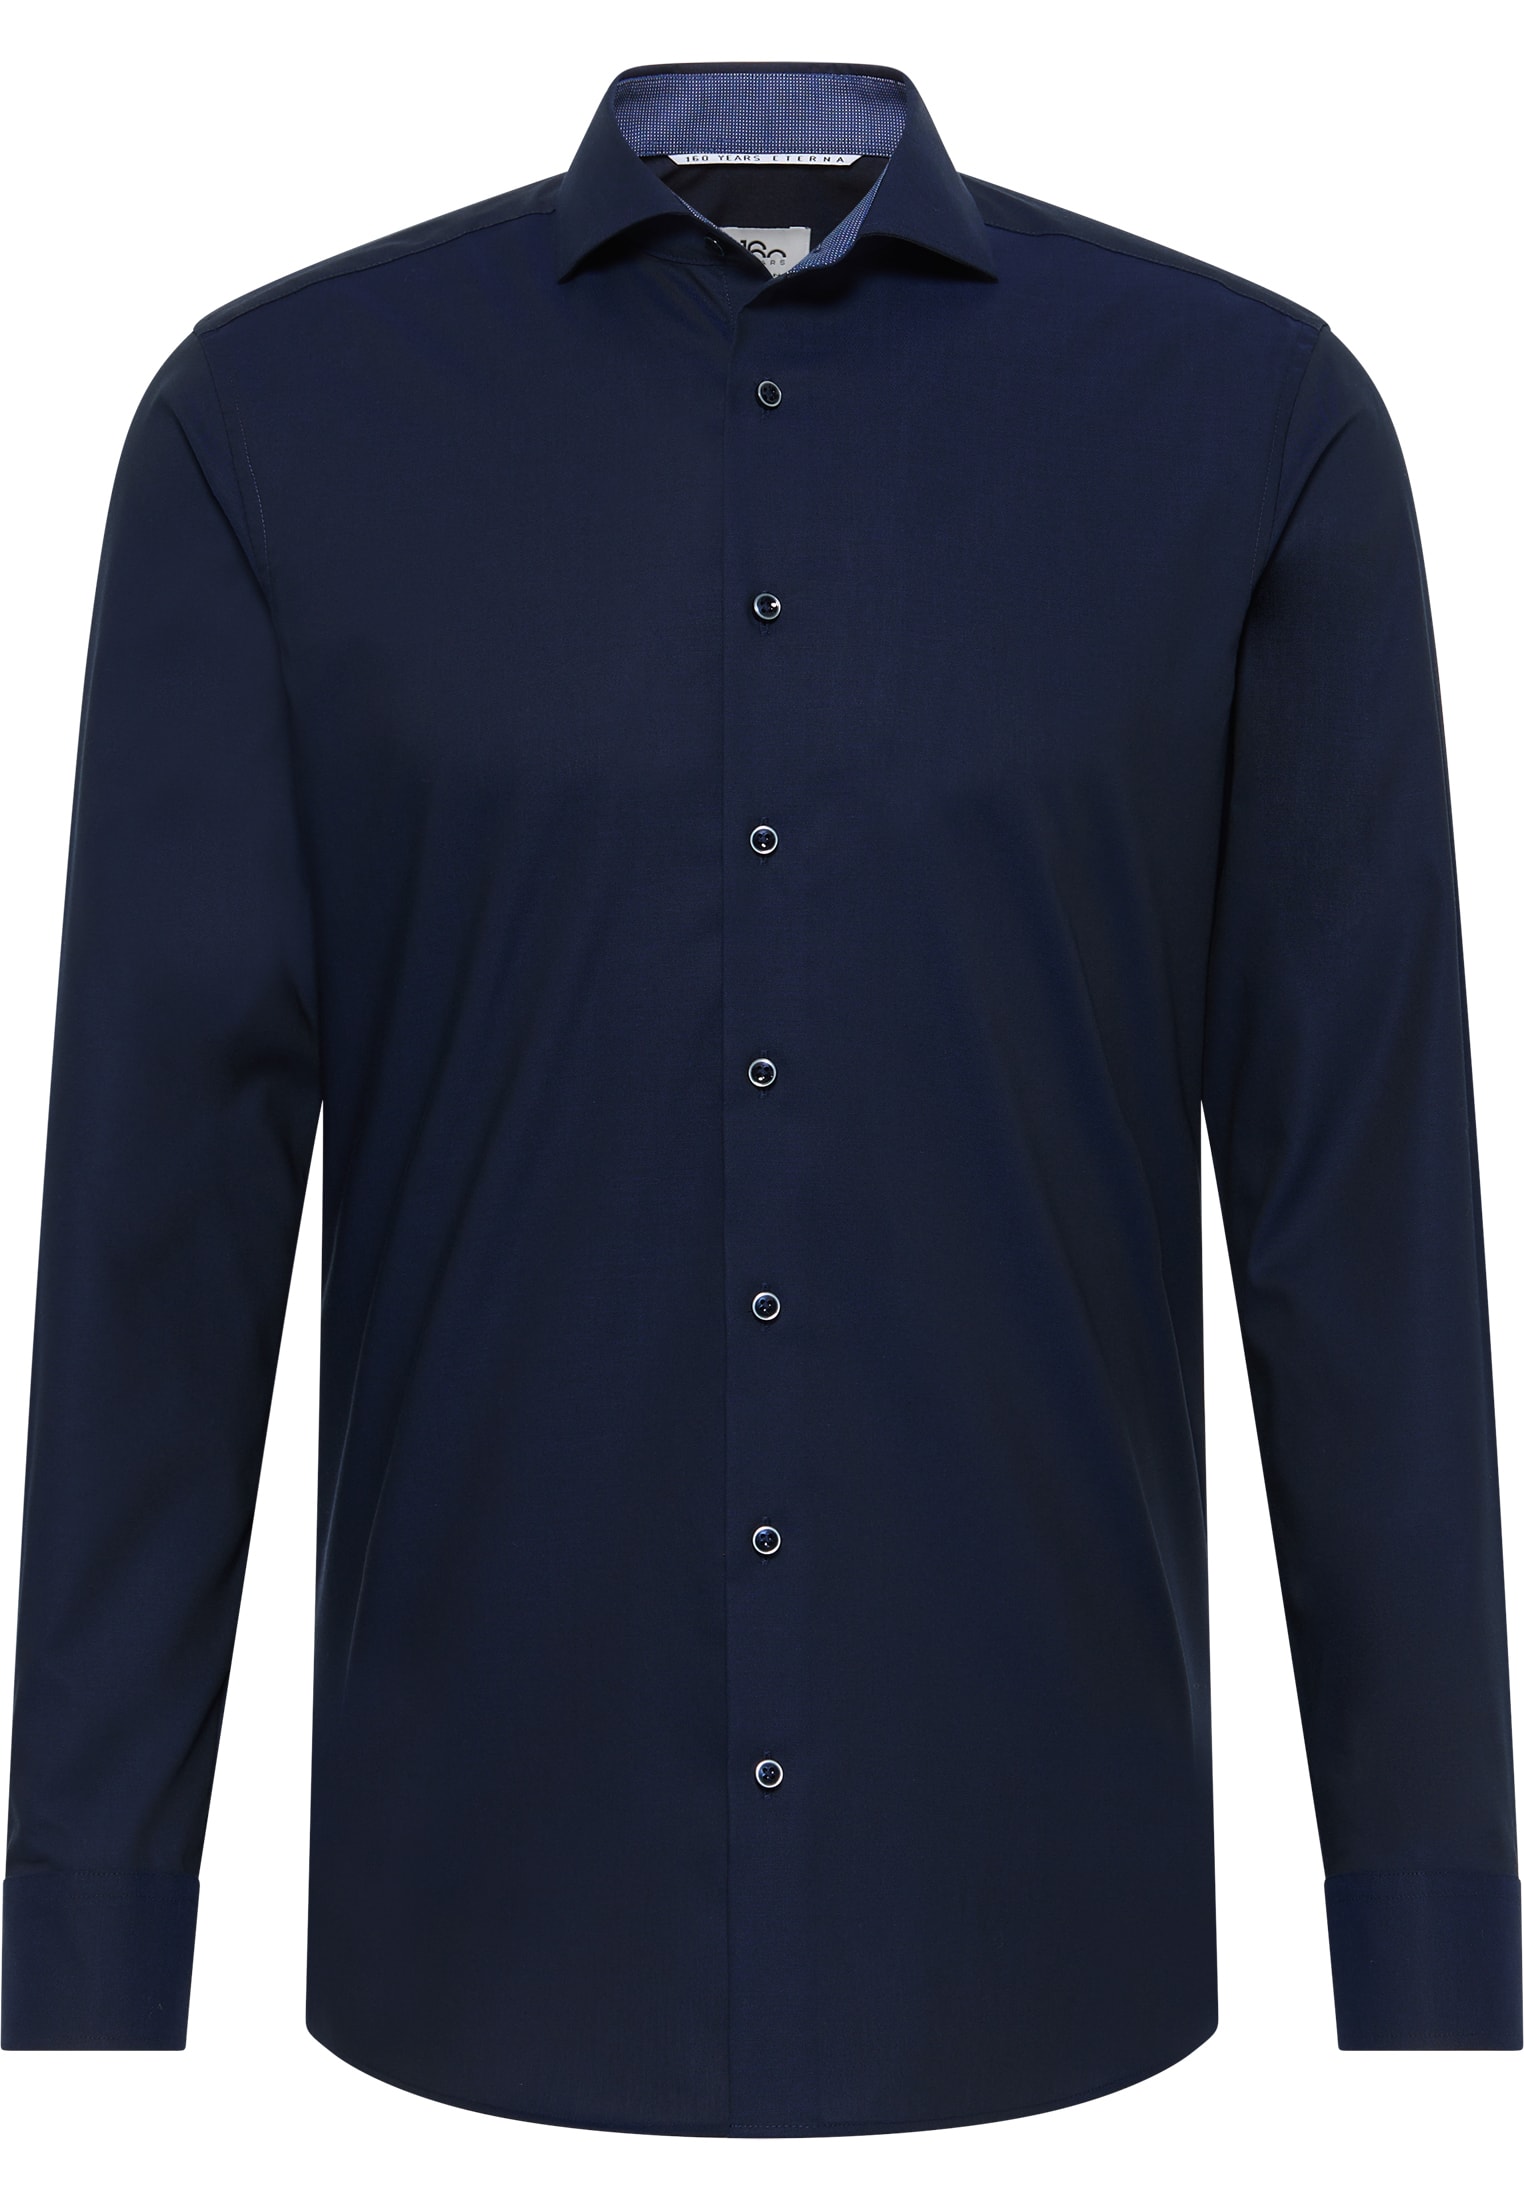 SLIM FIT Shirt in dark blue plain